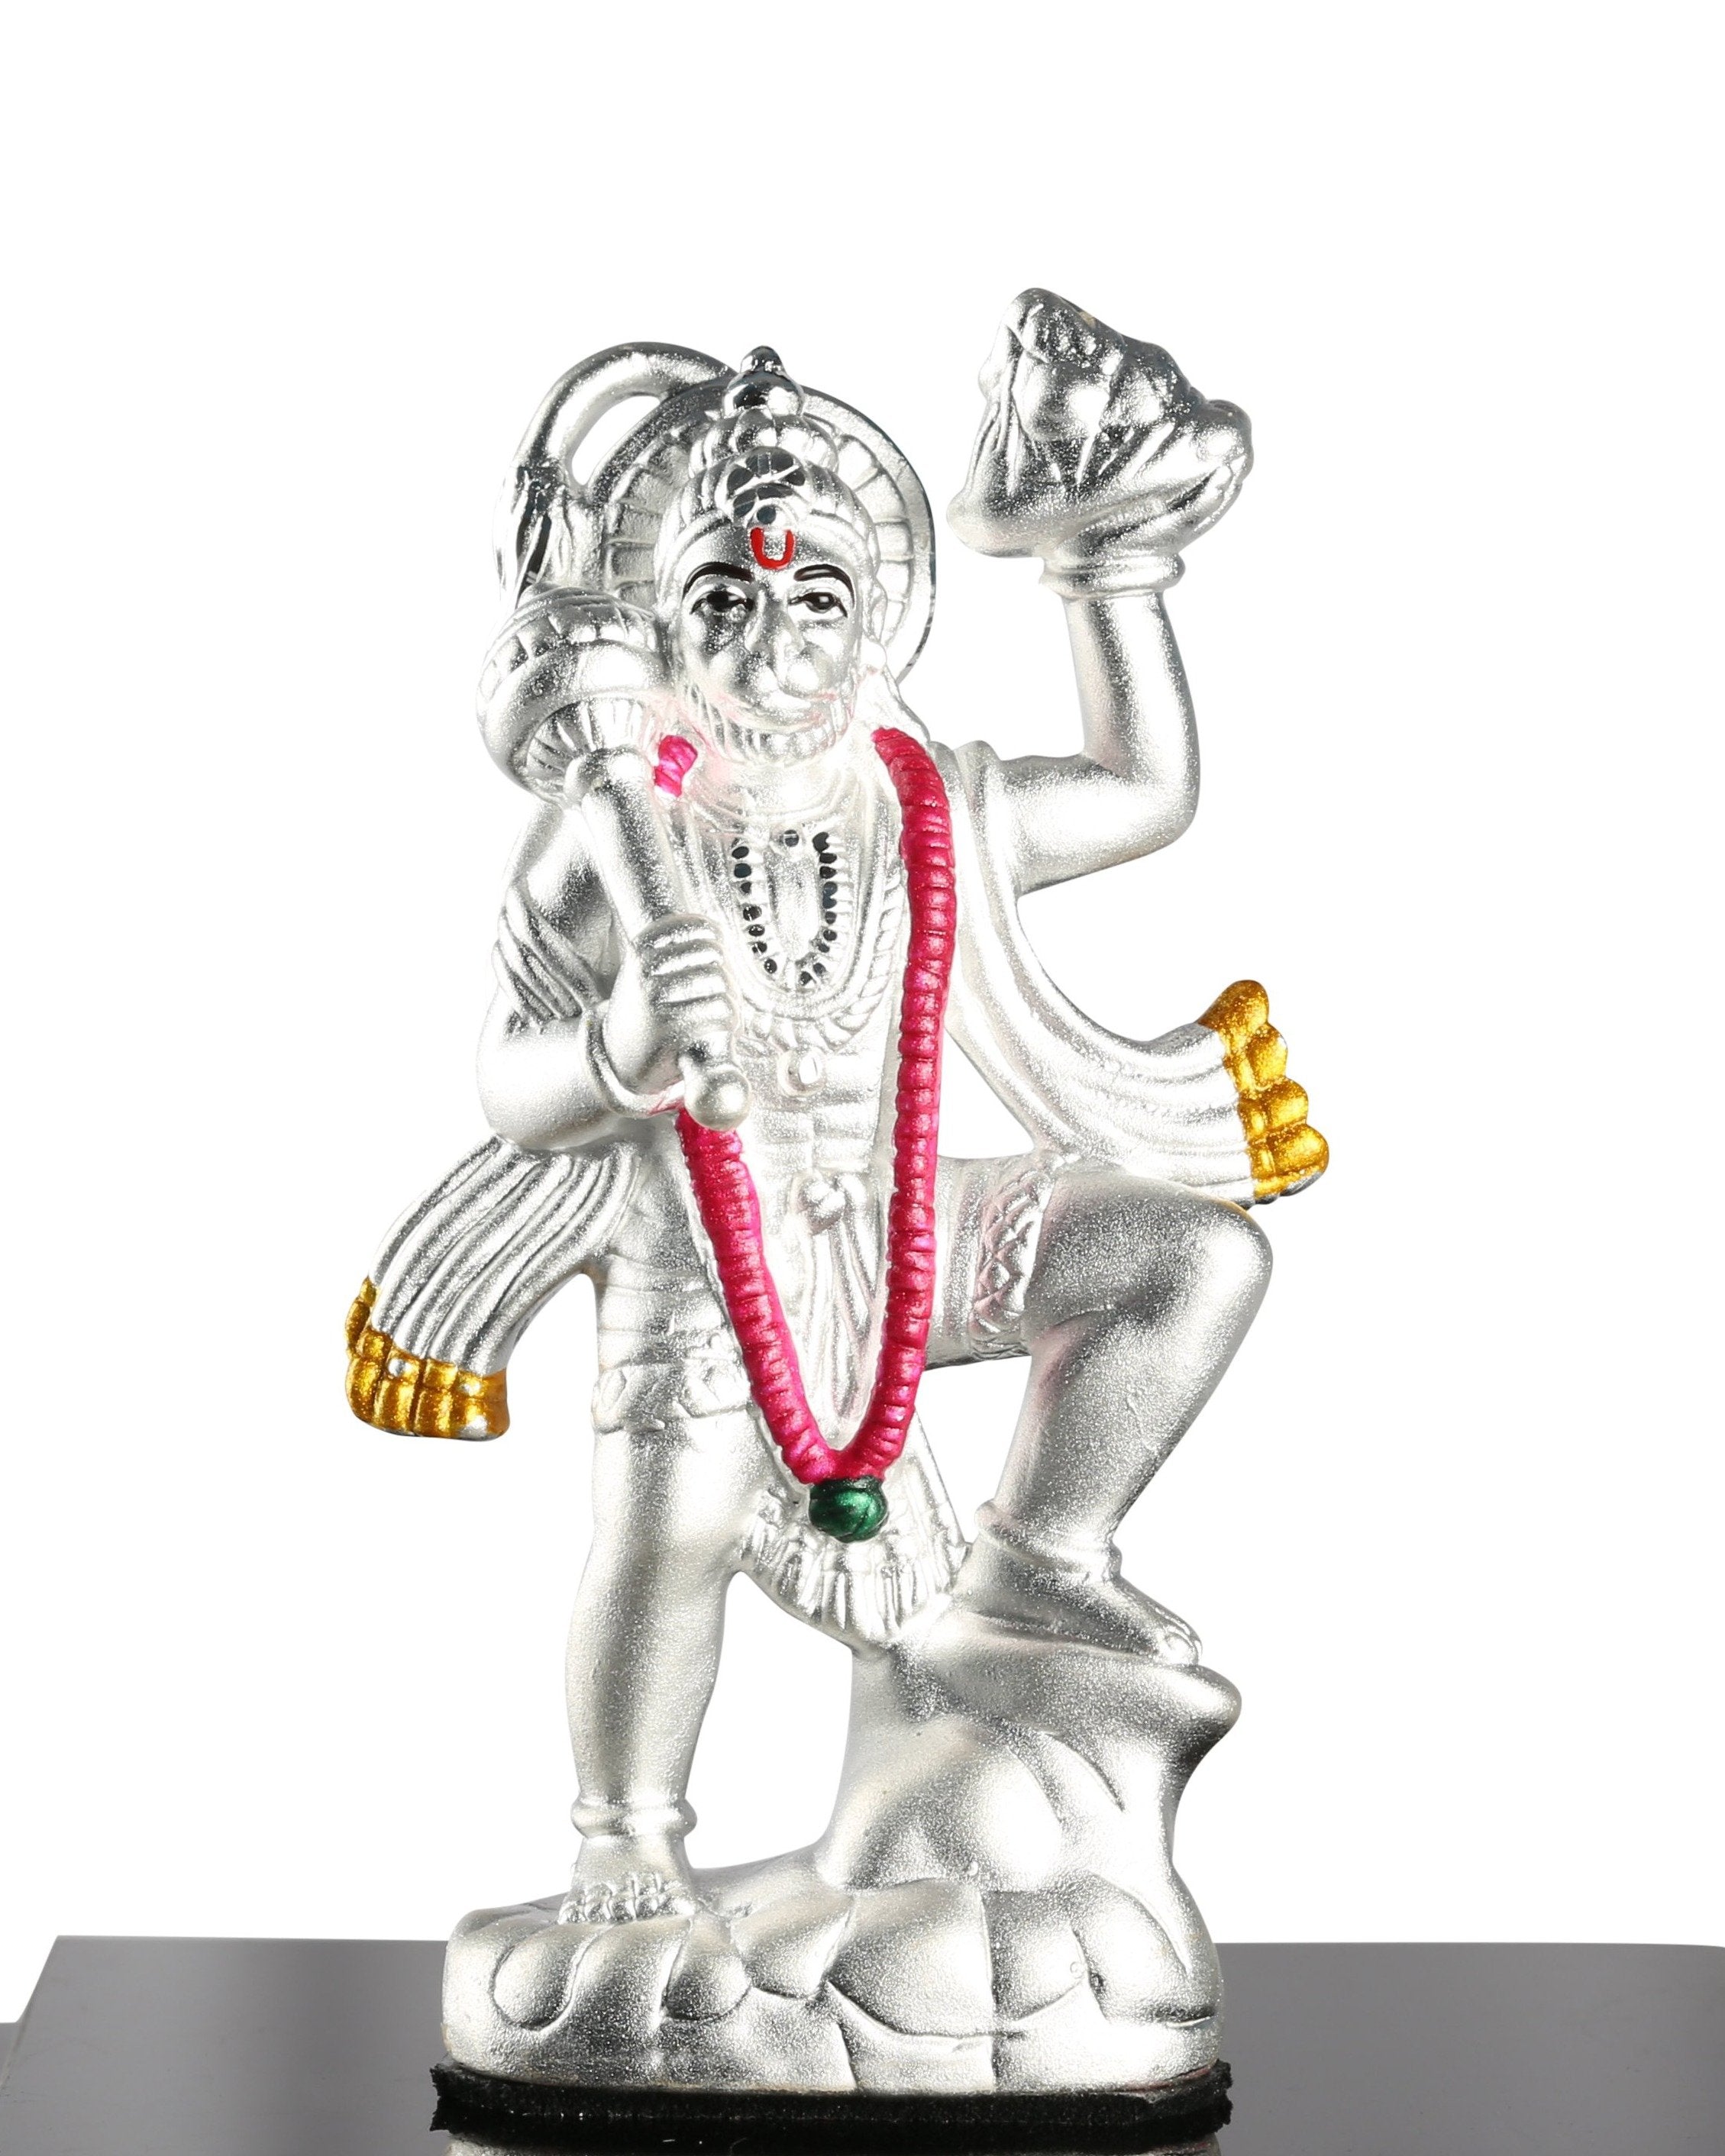 999 Pure Silver Hanuman Idol By Krysaliis Isvara - Krihm_Ms03 Idols